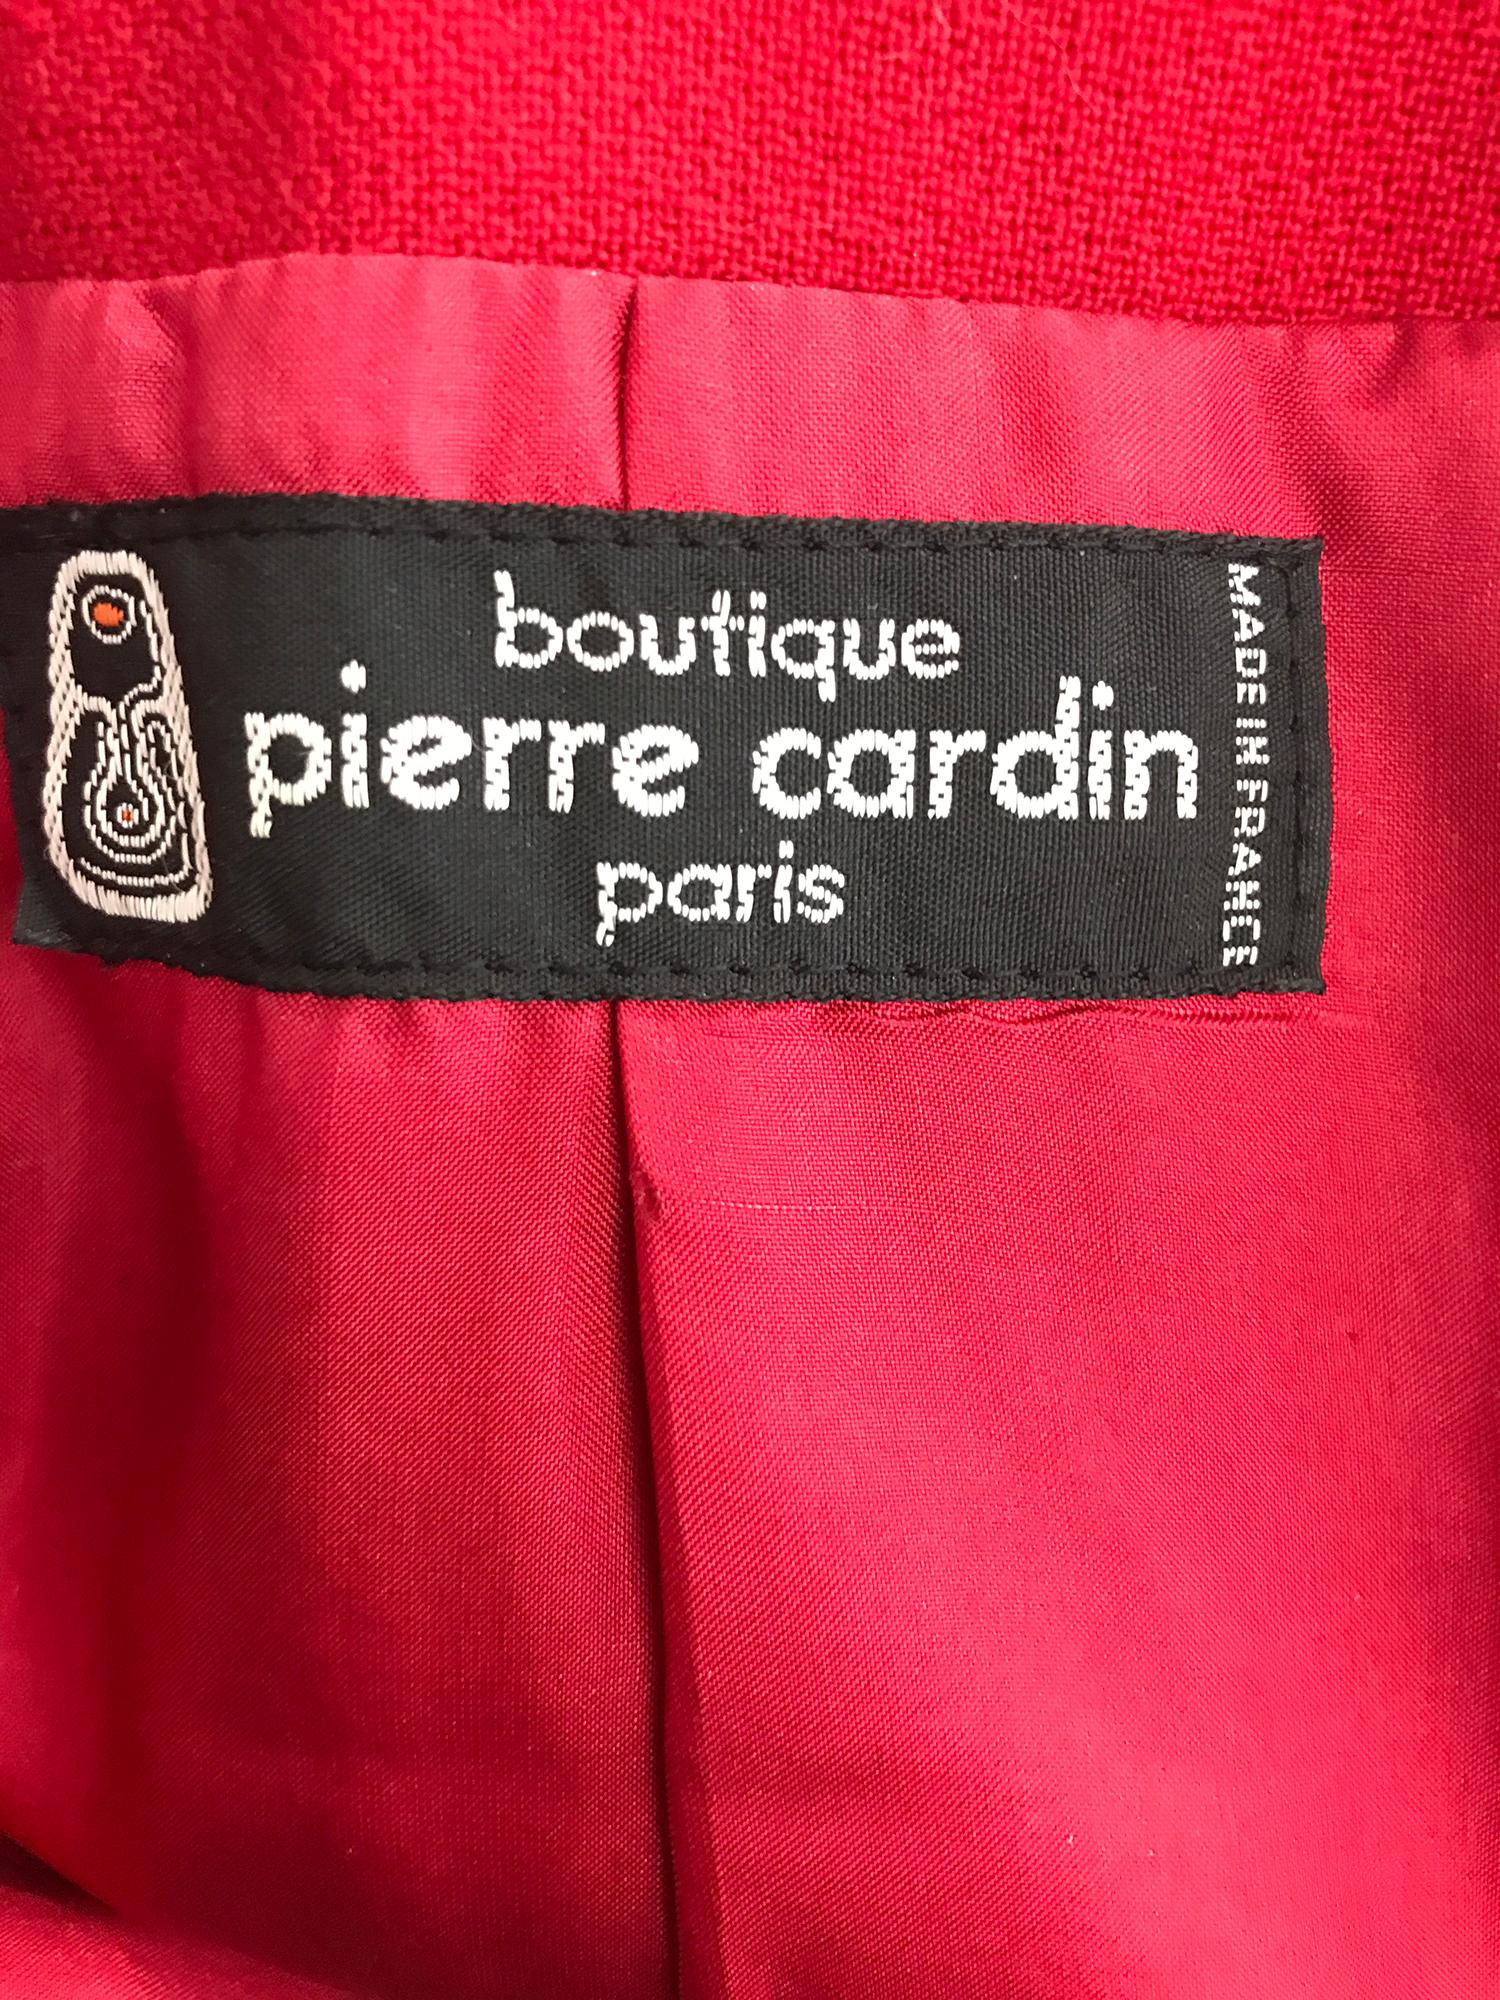 Boutique Pierre Cardin Paris Red Wool Space Age Jacket 1960s Rare Label 4